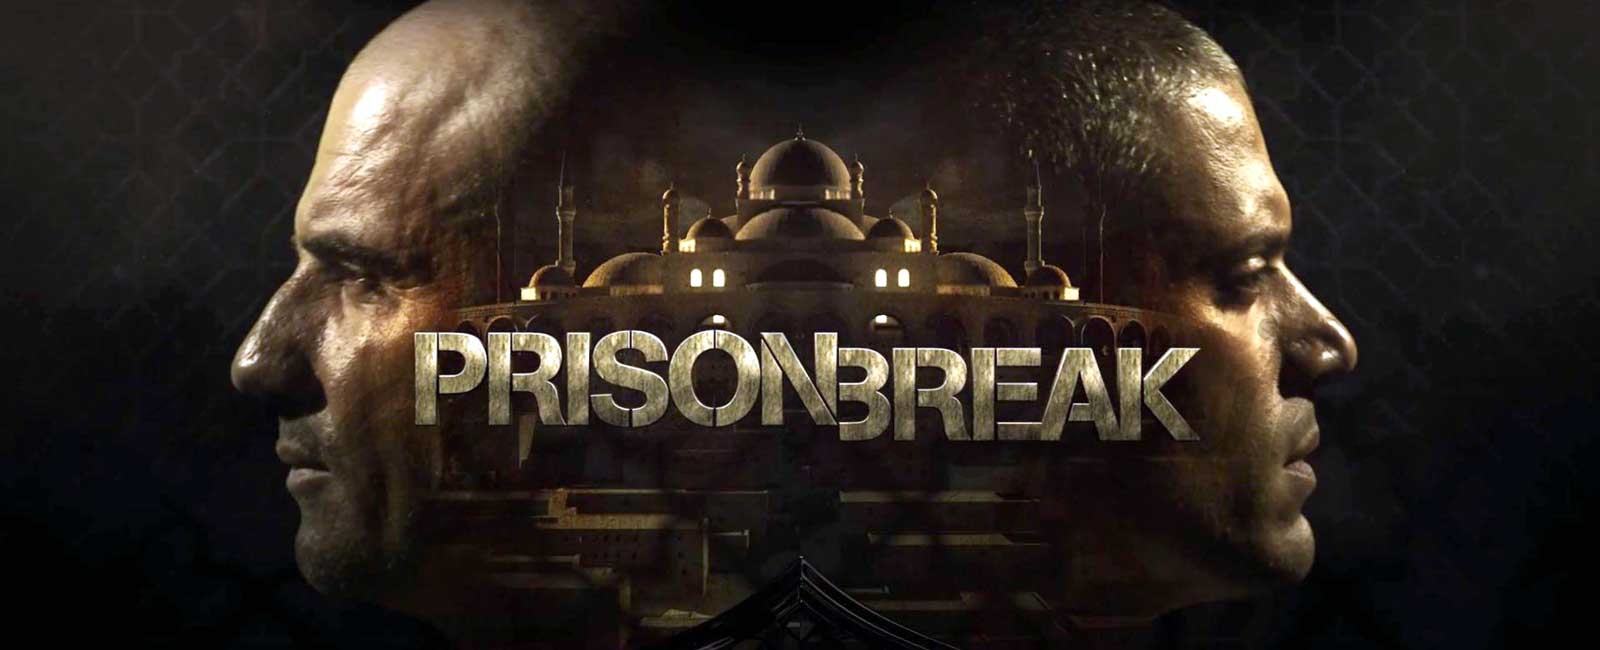 Vuelve “Prison Break”